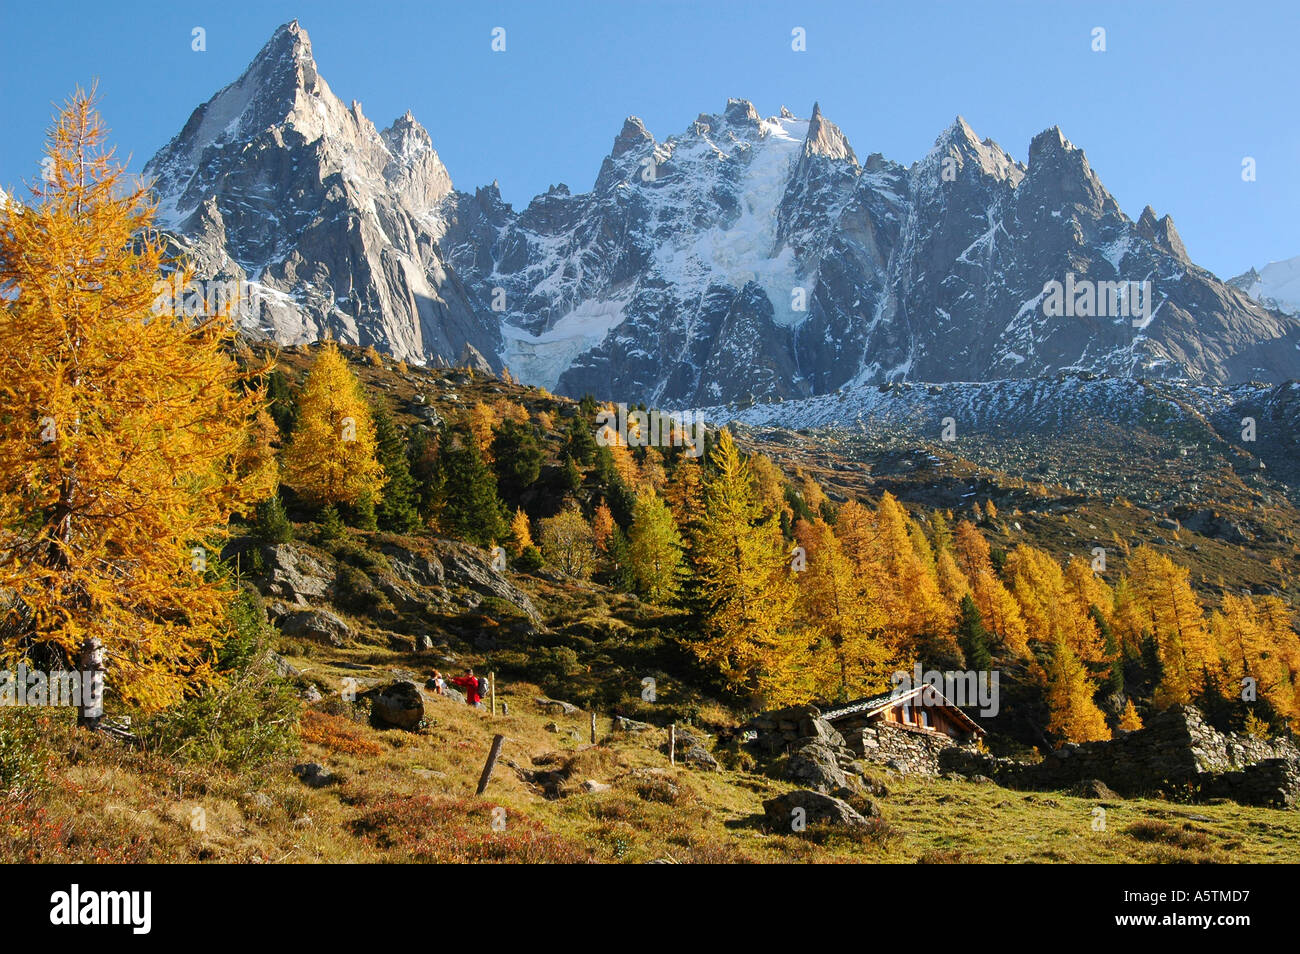 Herbst in den Bergen Chamonix Frankreich rientrano nelle Alpi Chamonix Francia Foto Stock